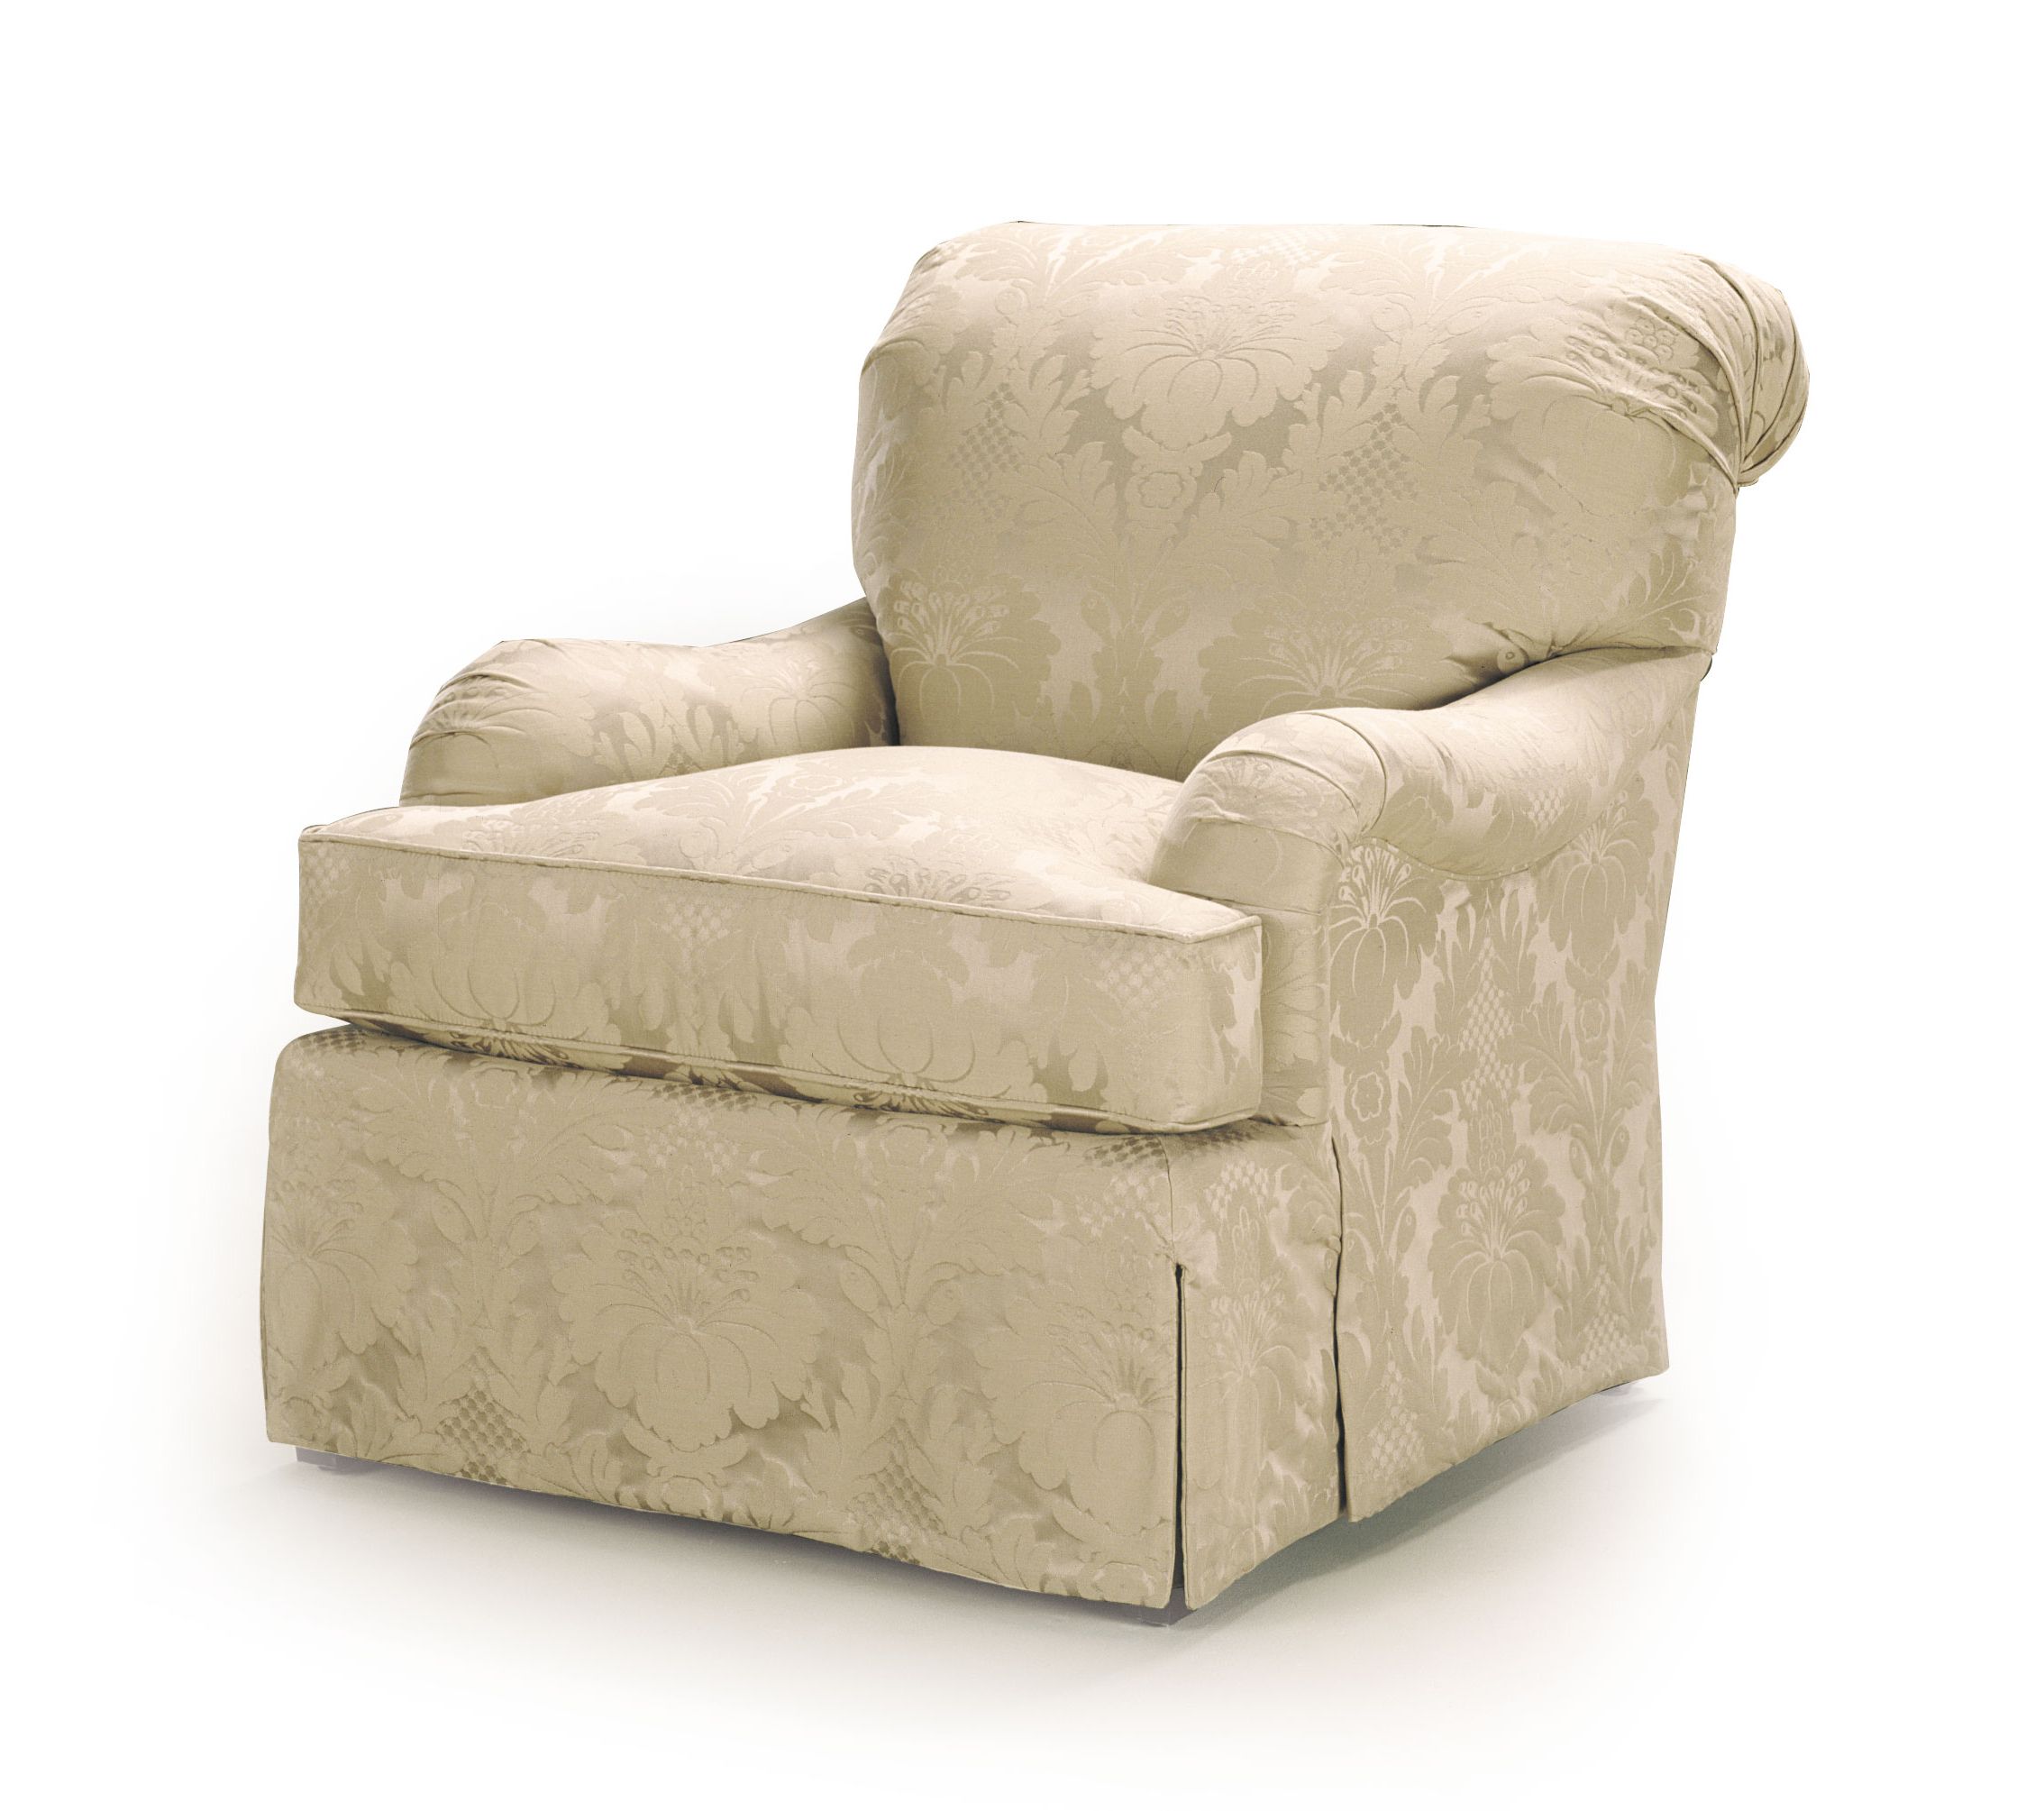 Allie Dark Grey Sofa Chairs Regarding Current Furniture (View 9 of 20)